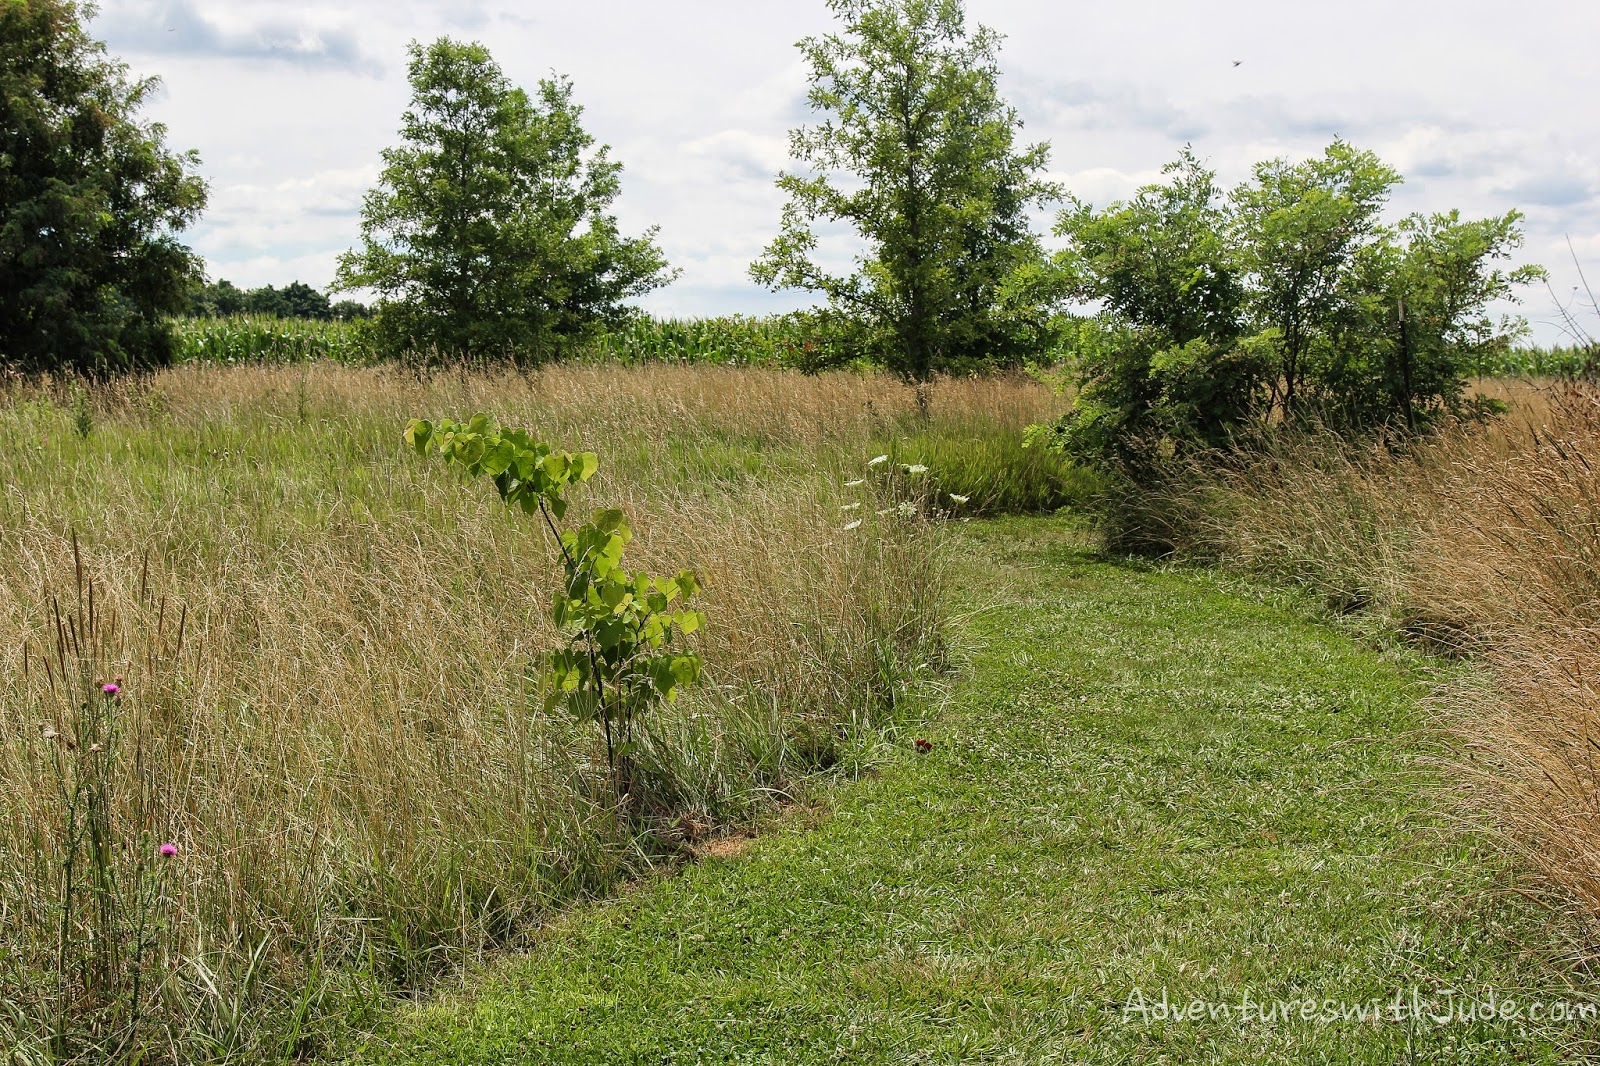 Antietam Battlefield: The path from "Clara's field" to the battle.